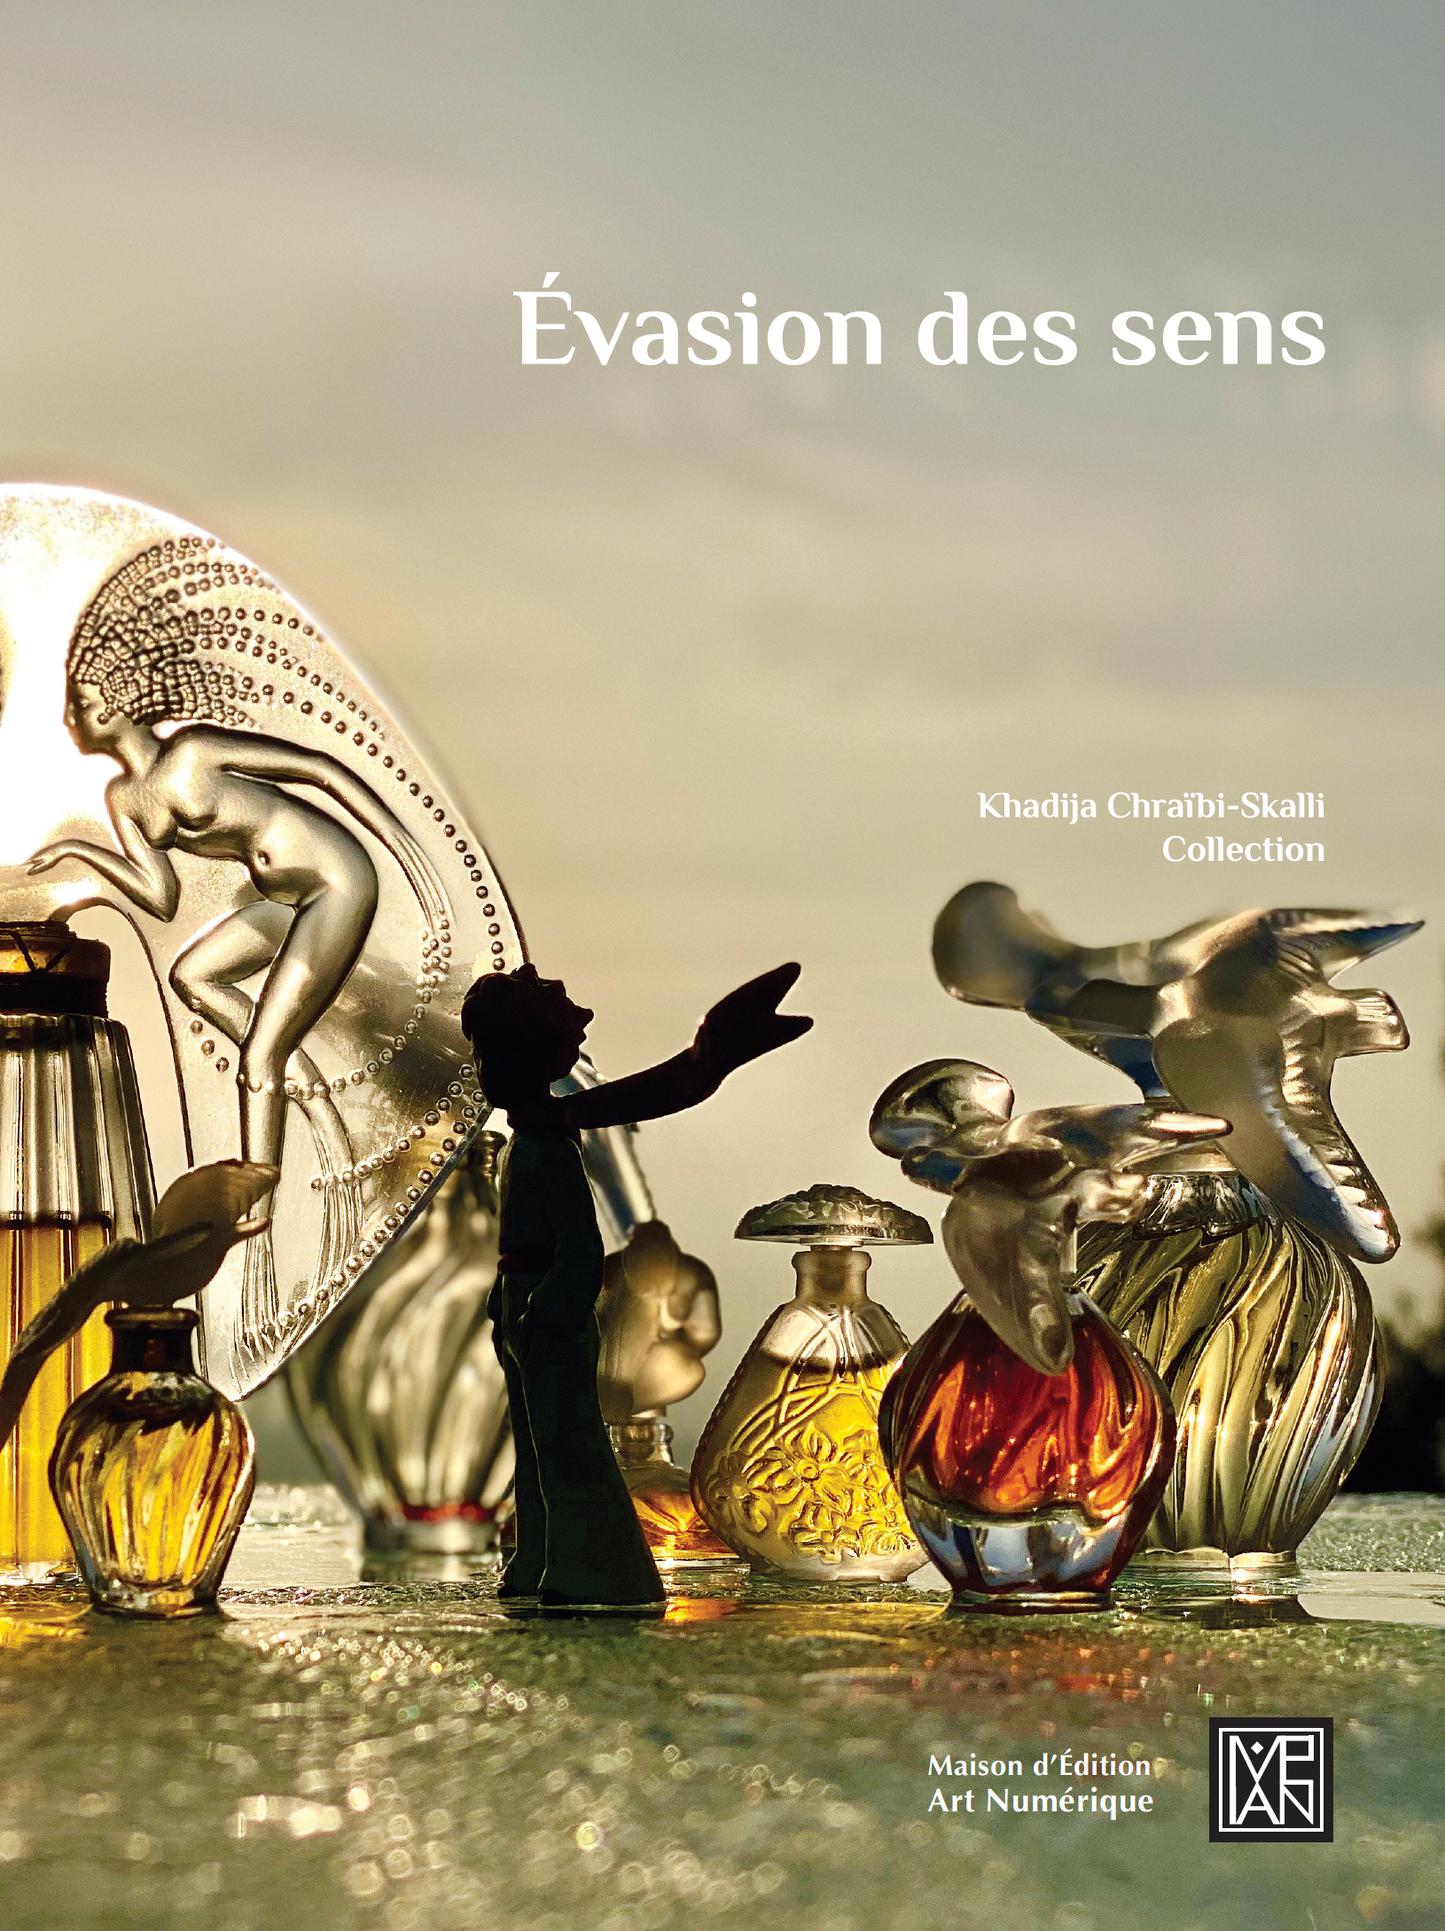 Livre "Evasion des sens" - Collection privée de Khadija Chraïbi-Skalli